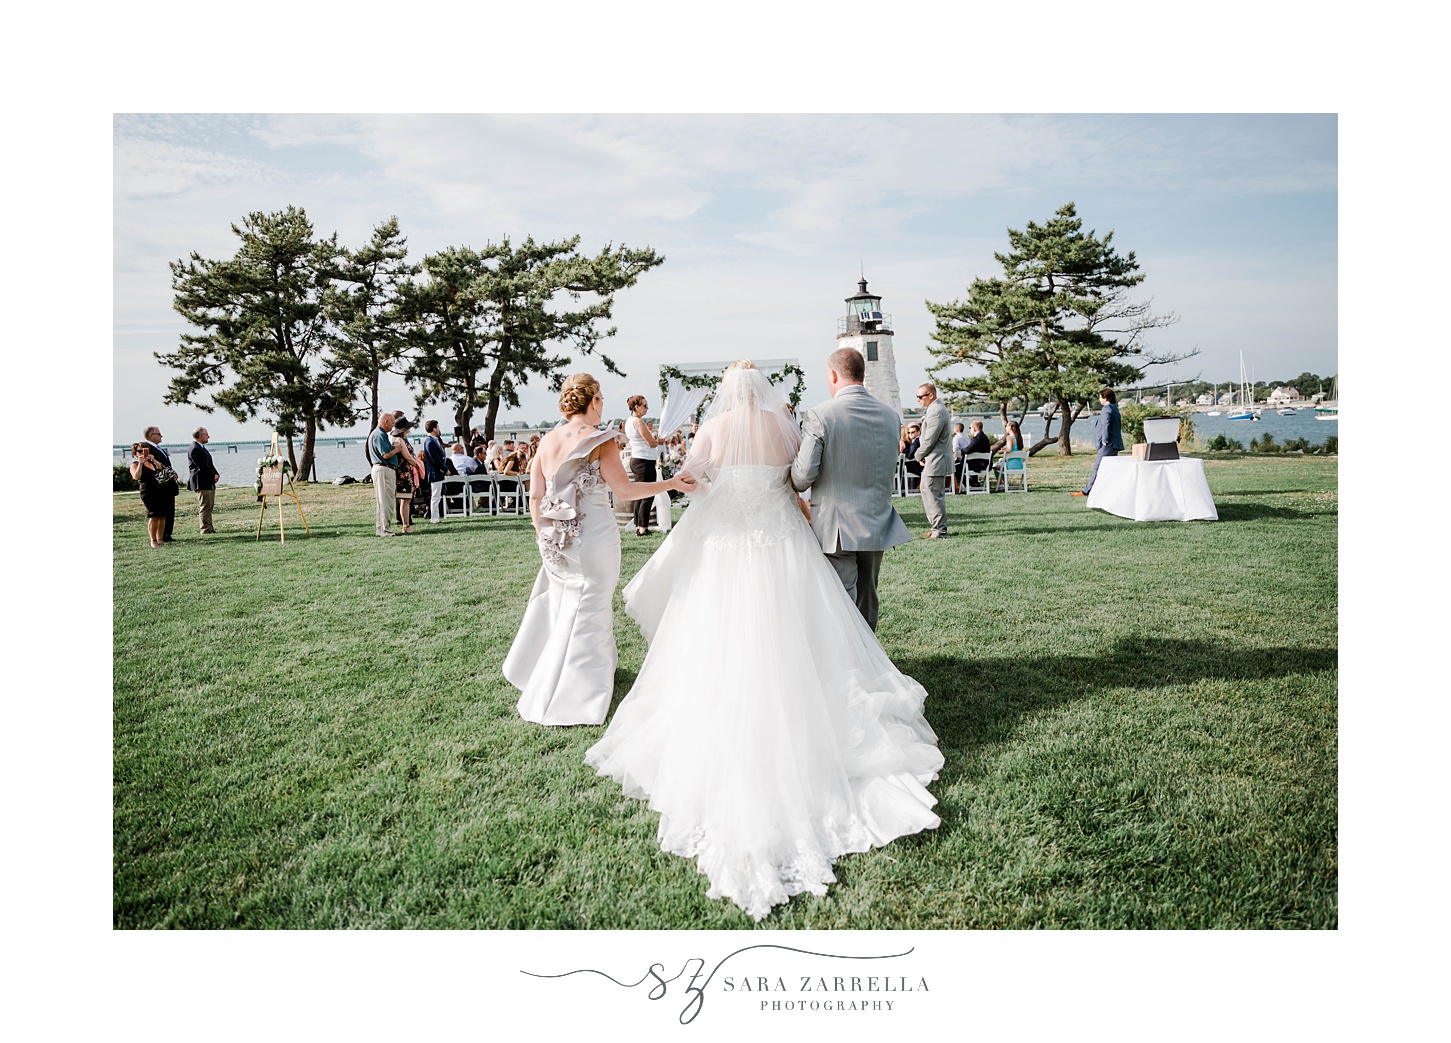 parents walk bride down aisle for ceremony at Gurney’s Newport